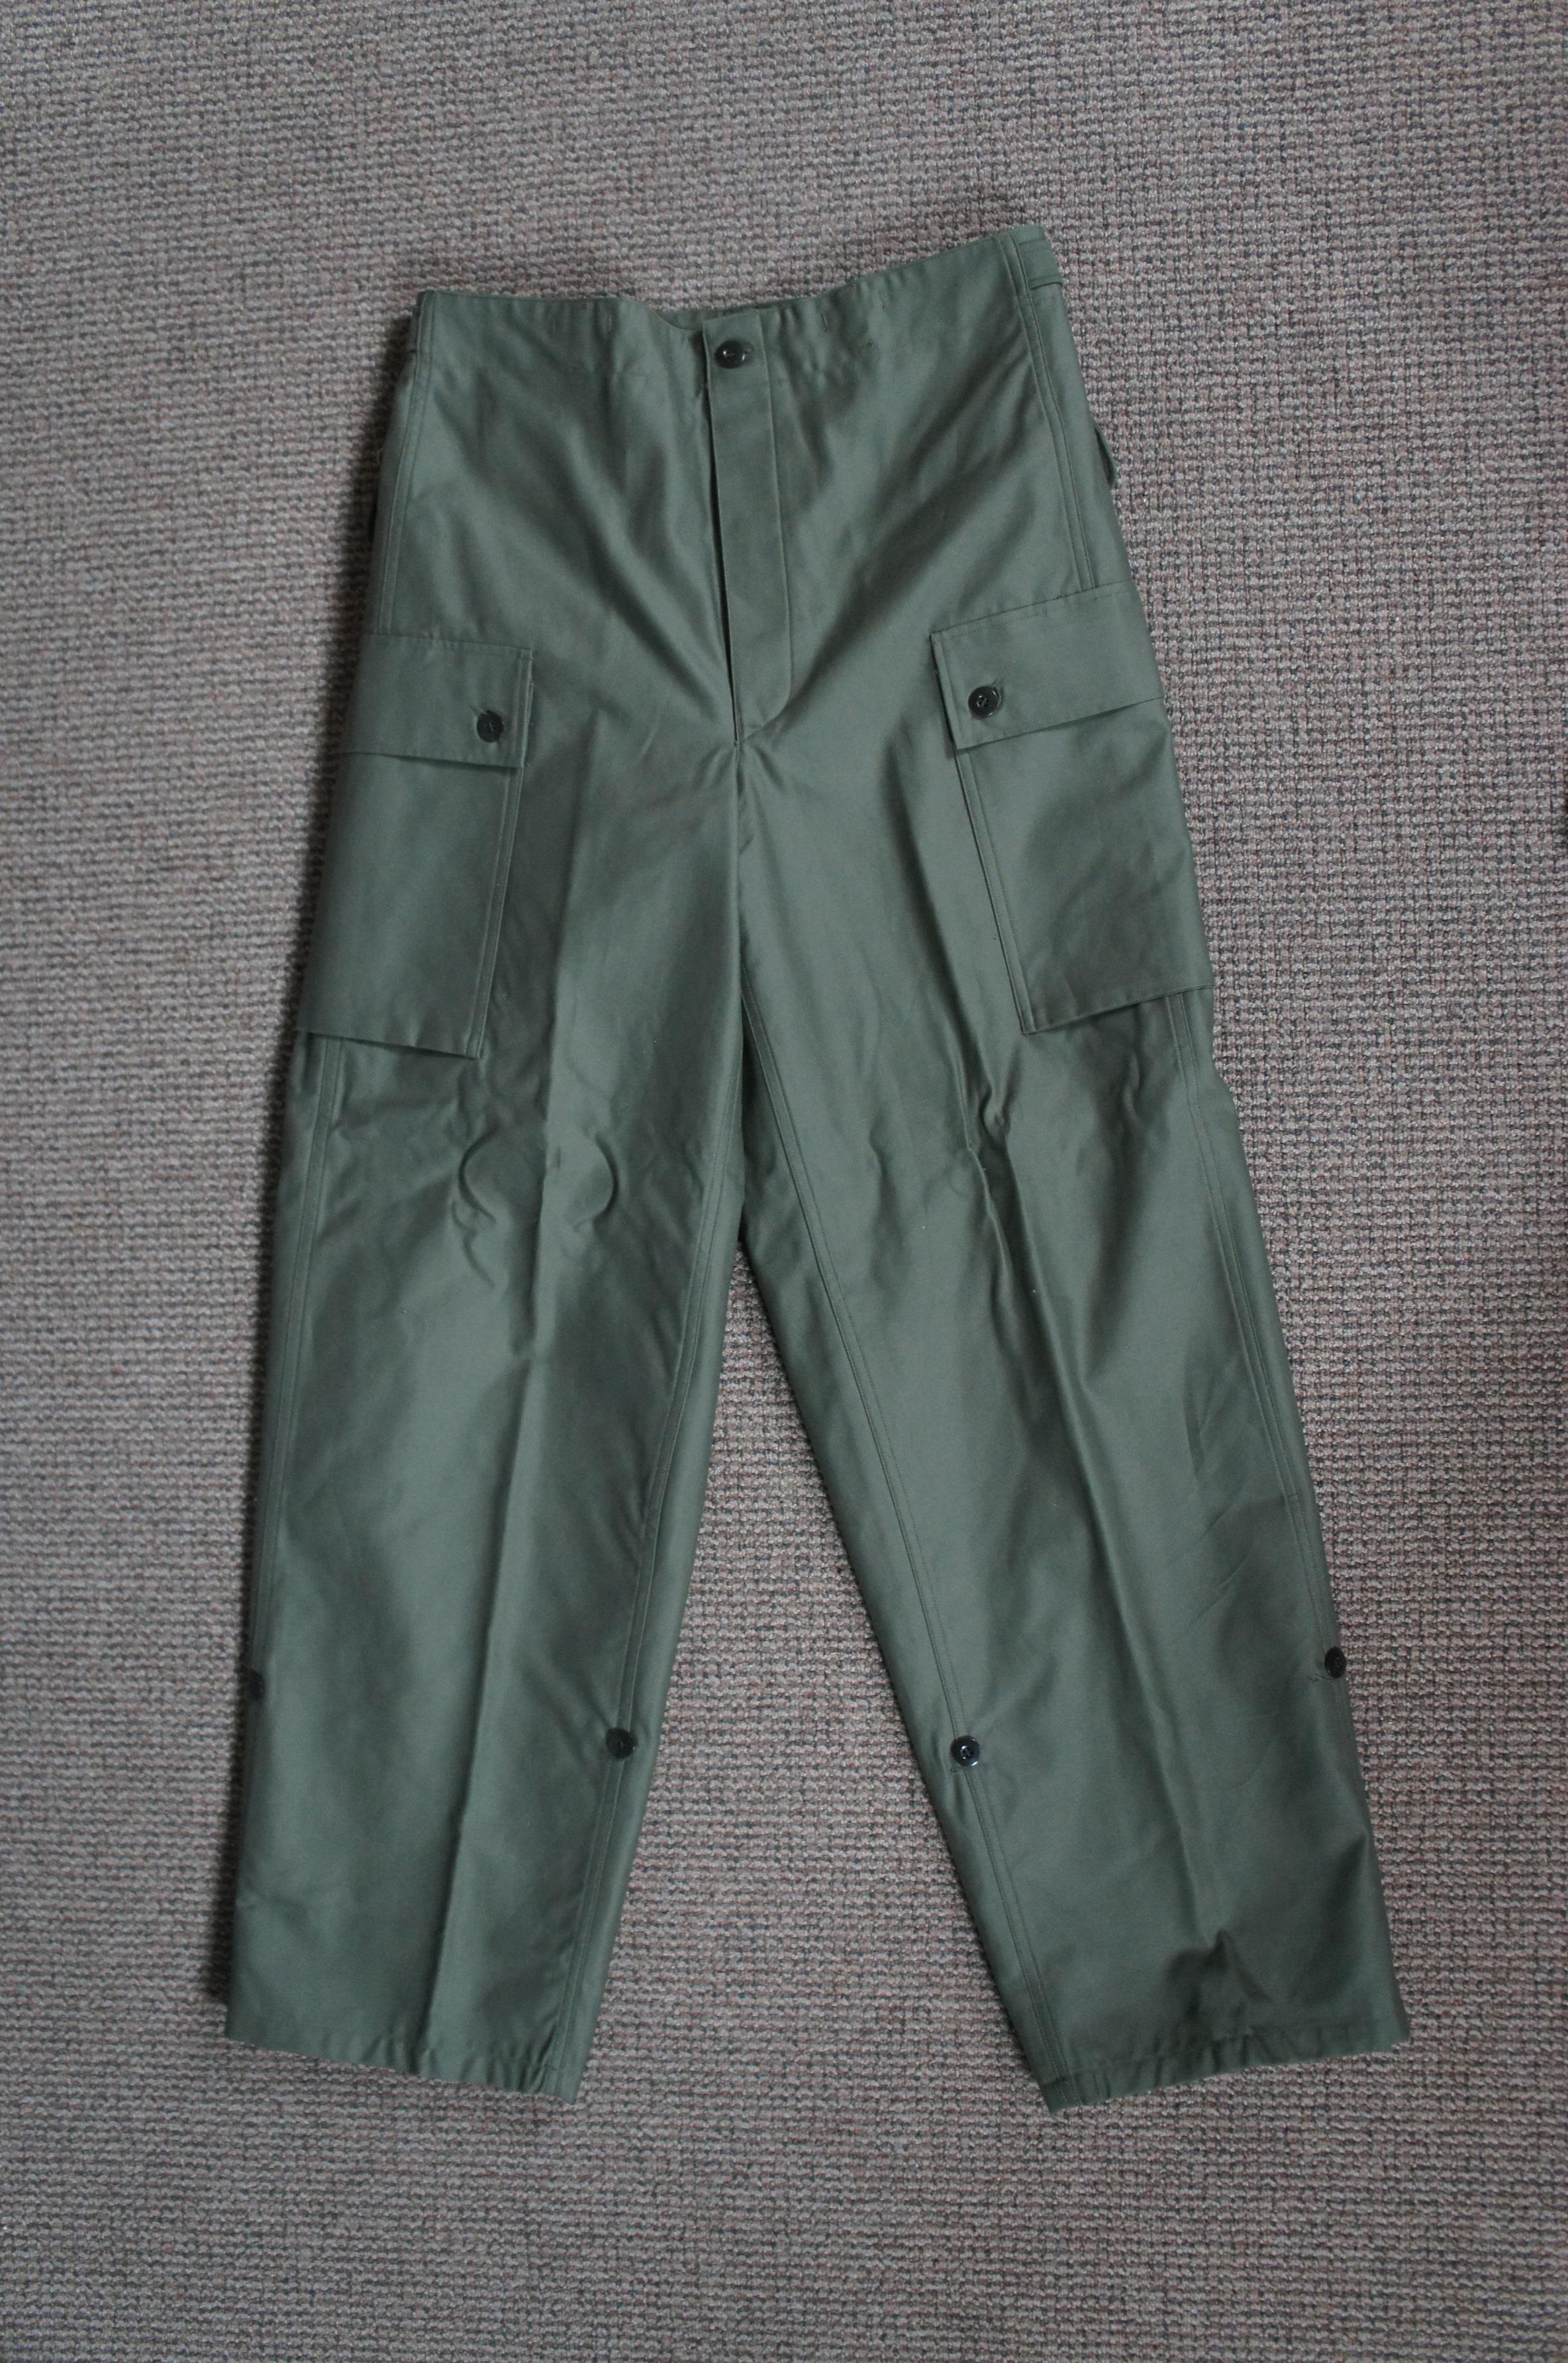 5 Pc Mid Century United States Military Pants Jackets Vietnam USMC For Sale 2